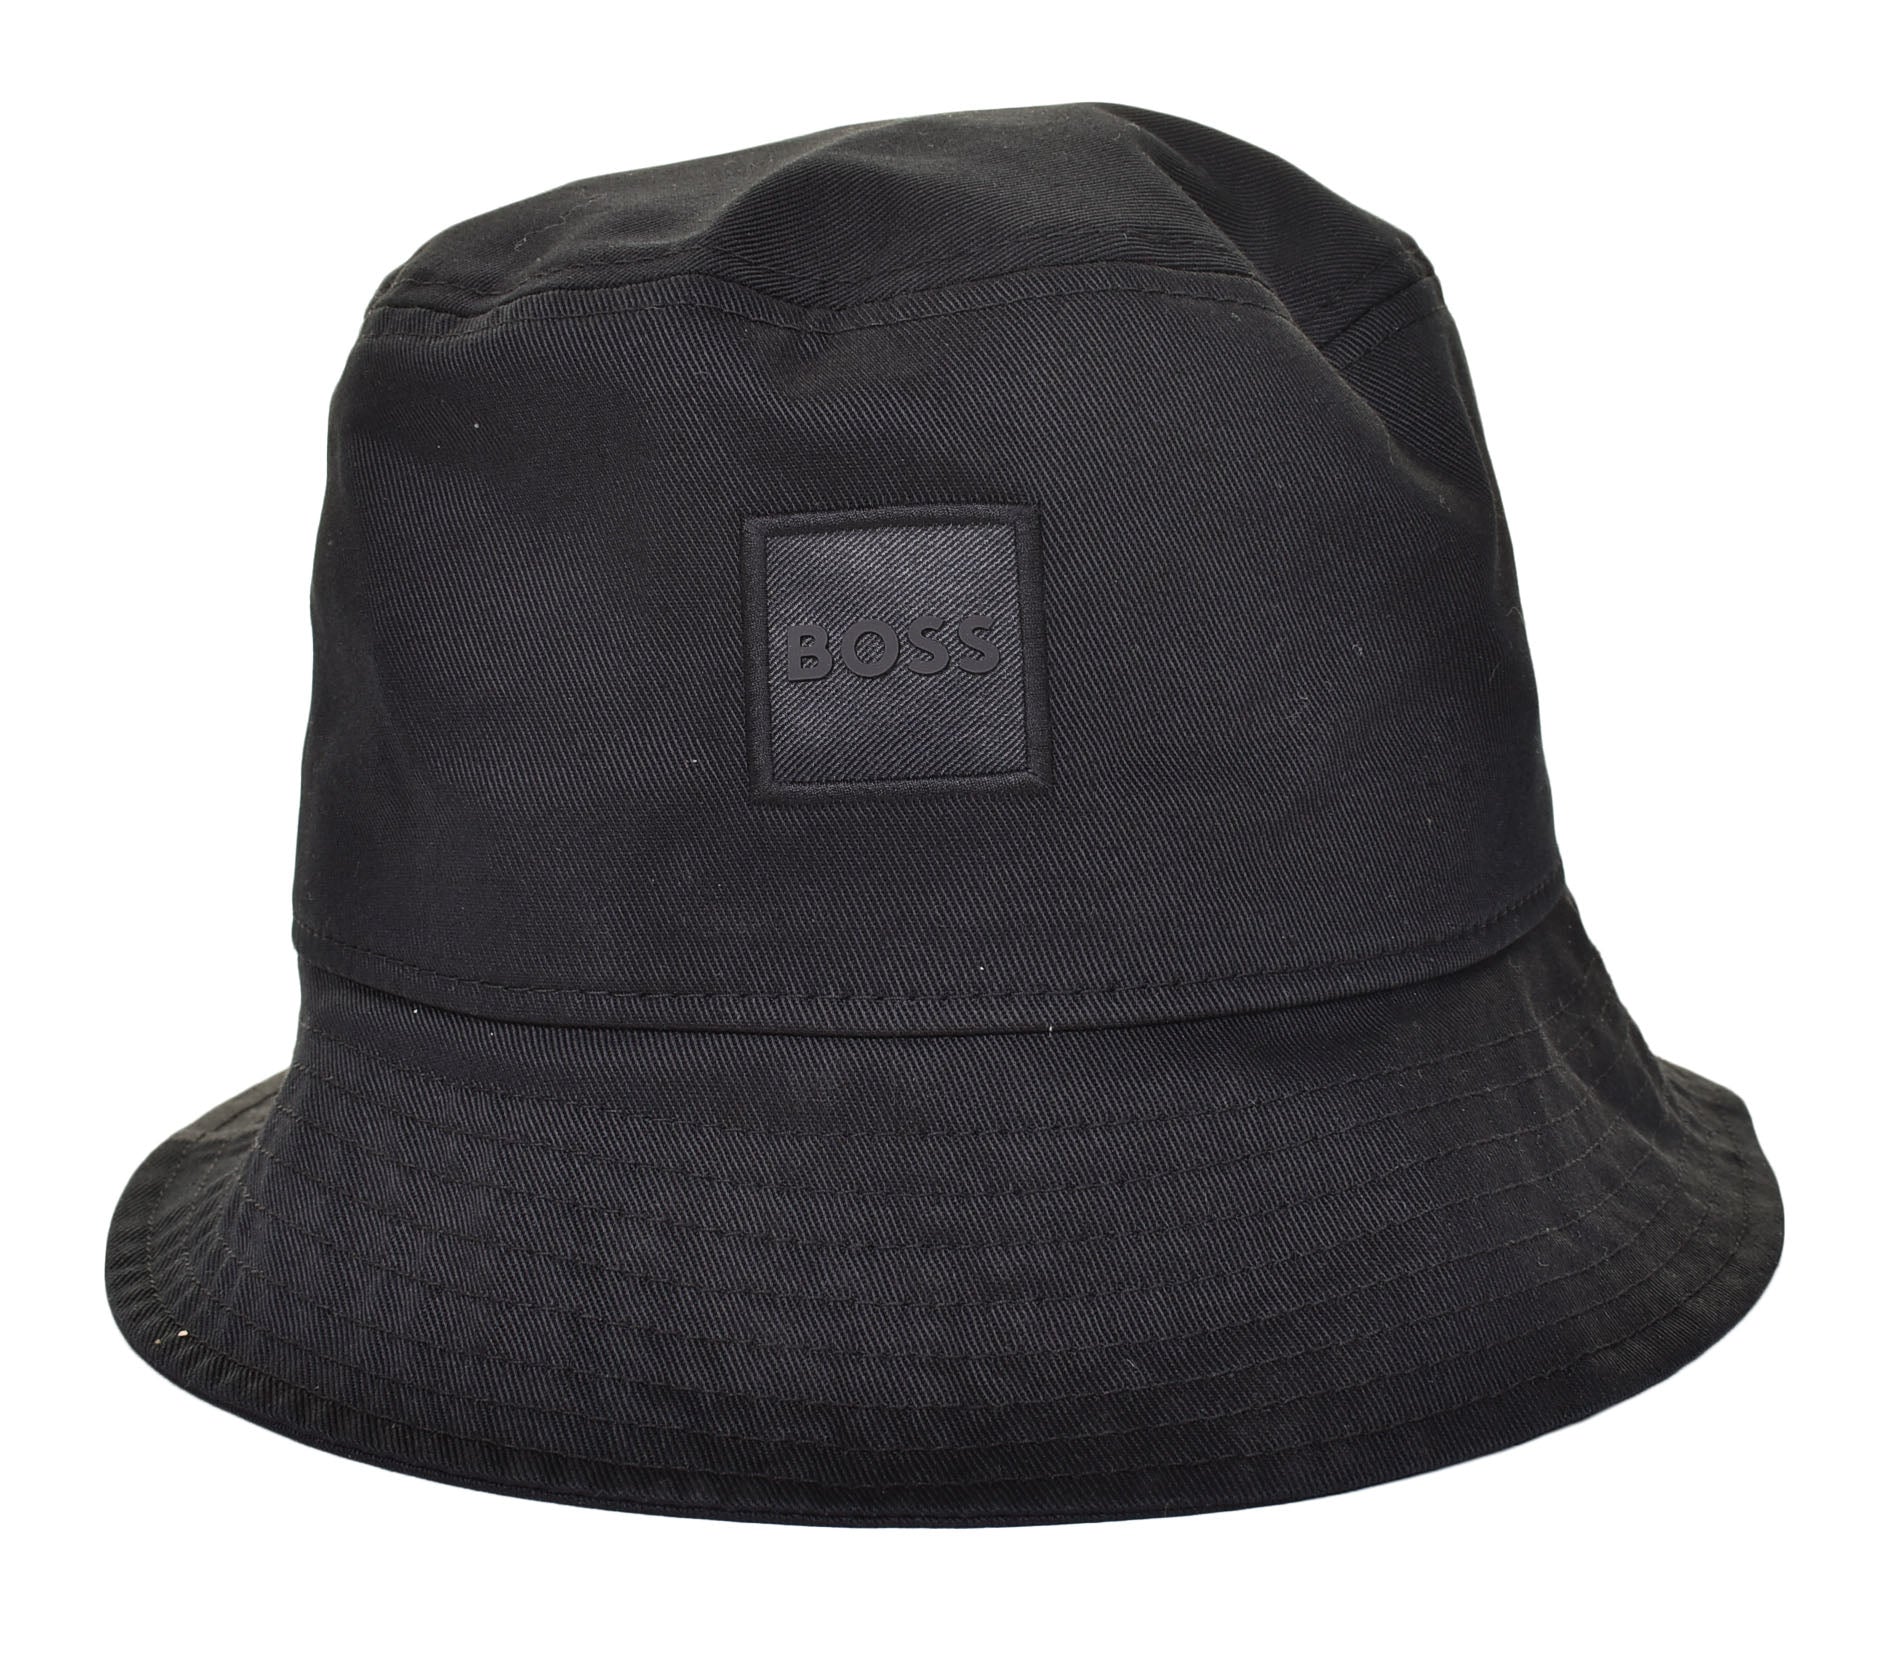 Febas Bucket Hat Black